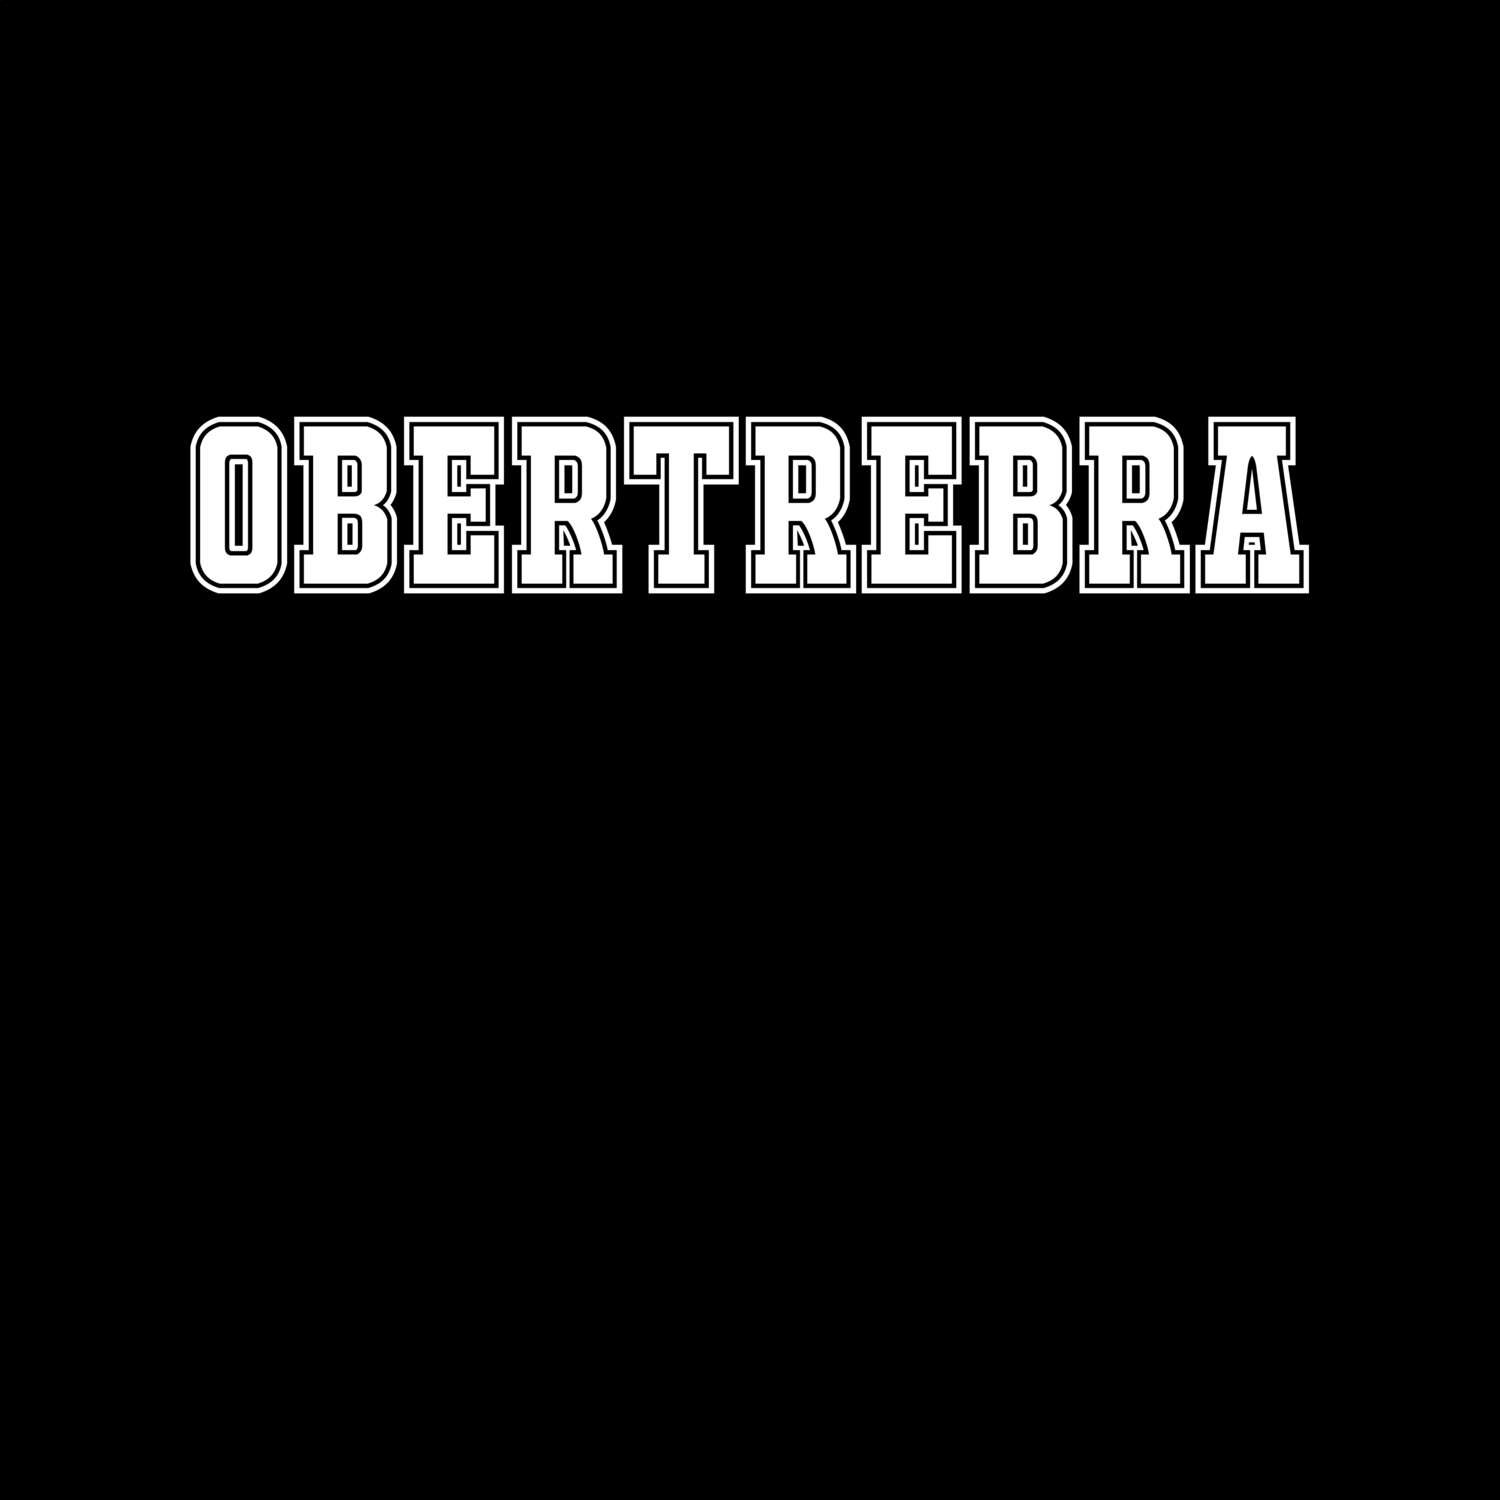 Obertrebra T-Shirt »Classic«